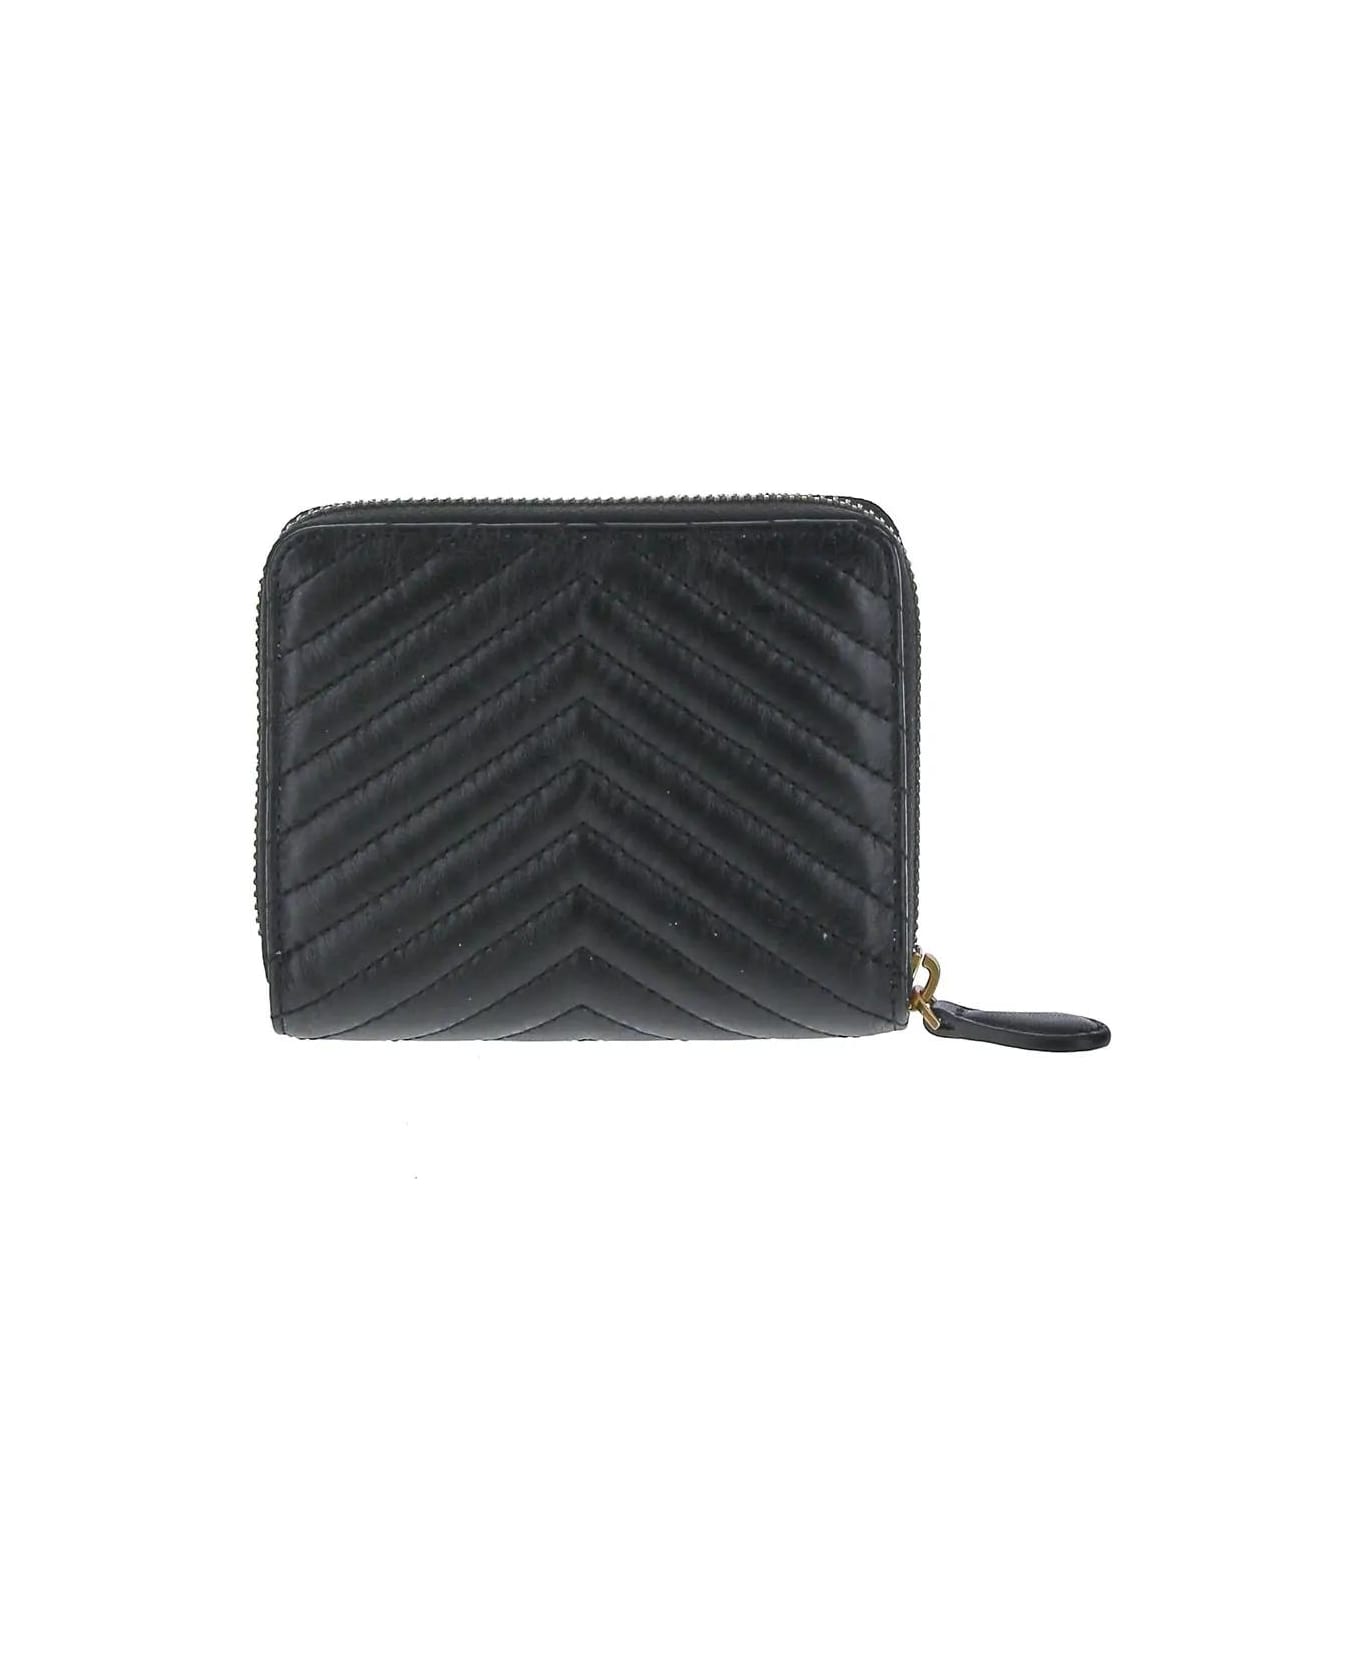 Pinko Taylor Leather Zip Around Wallet - Black